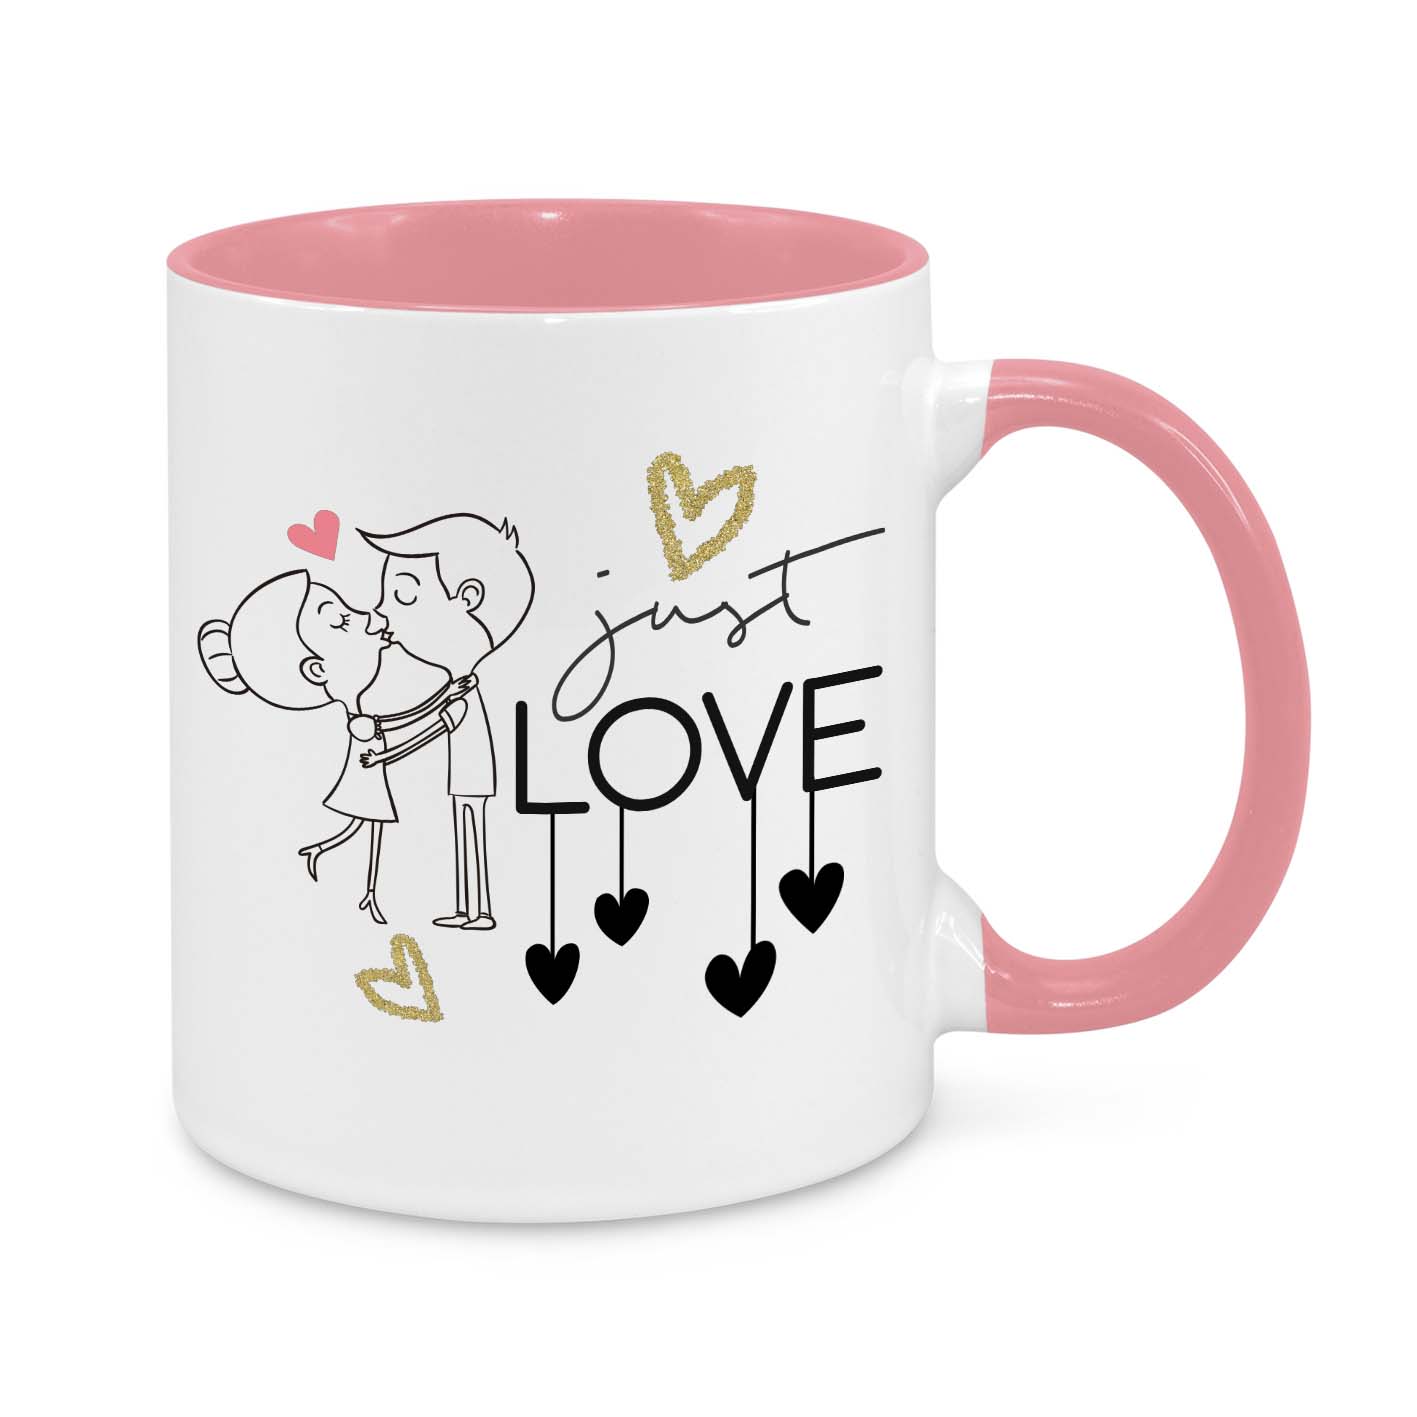 Just Love Novelty Mug